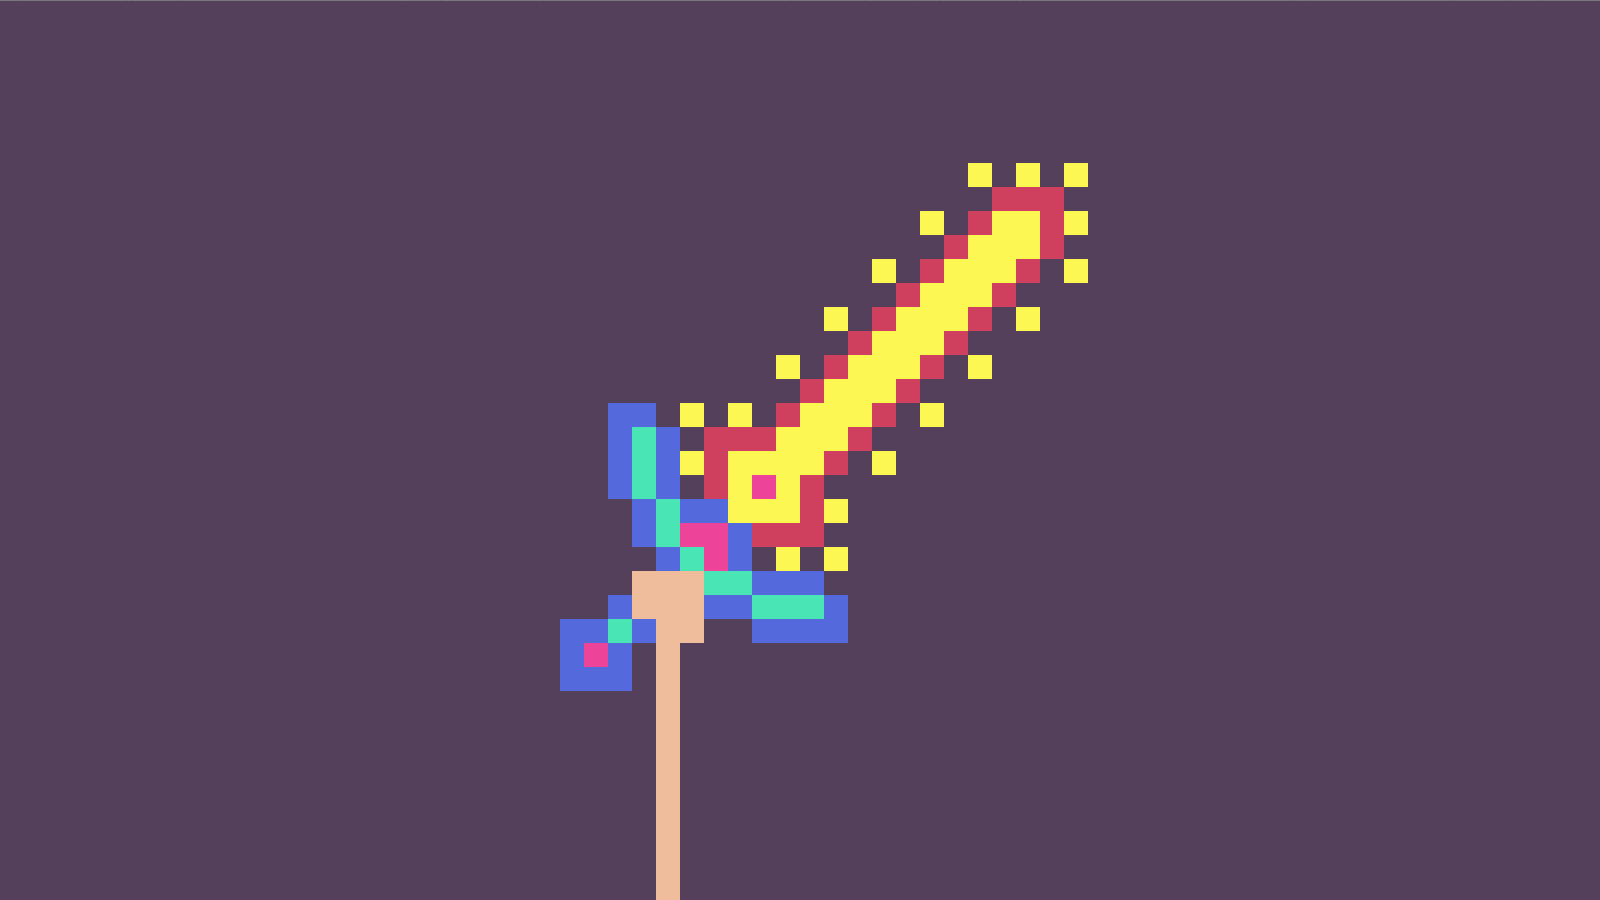 A pixelated sword